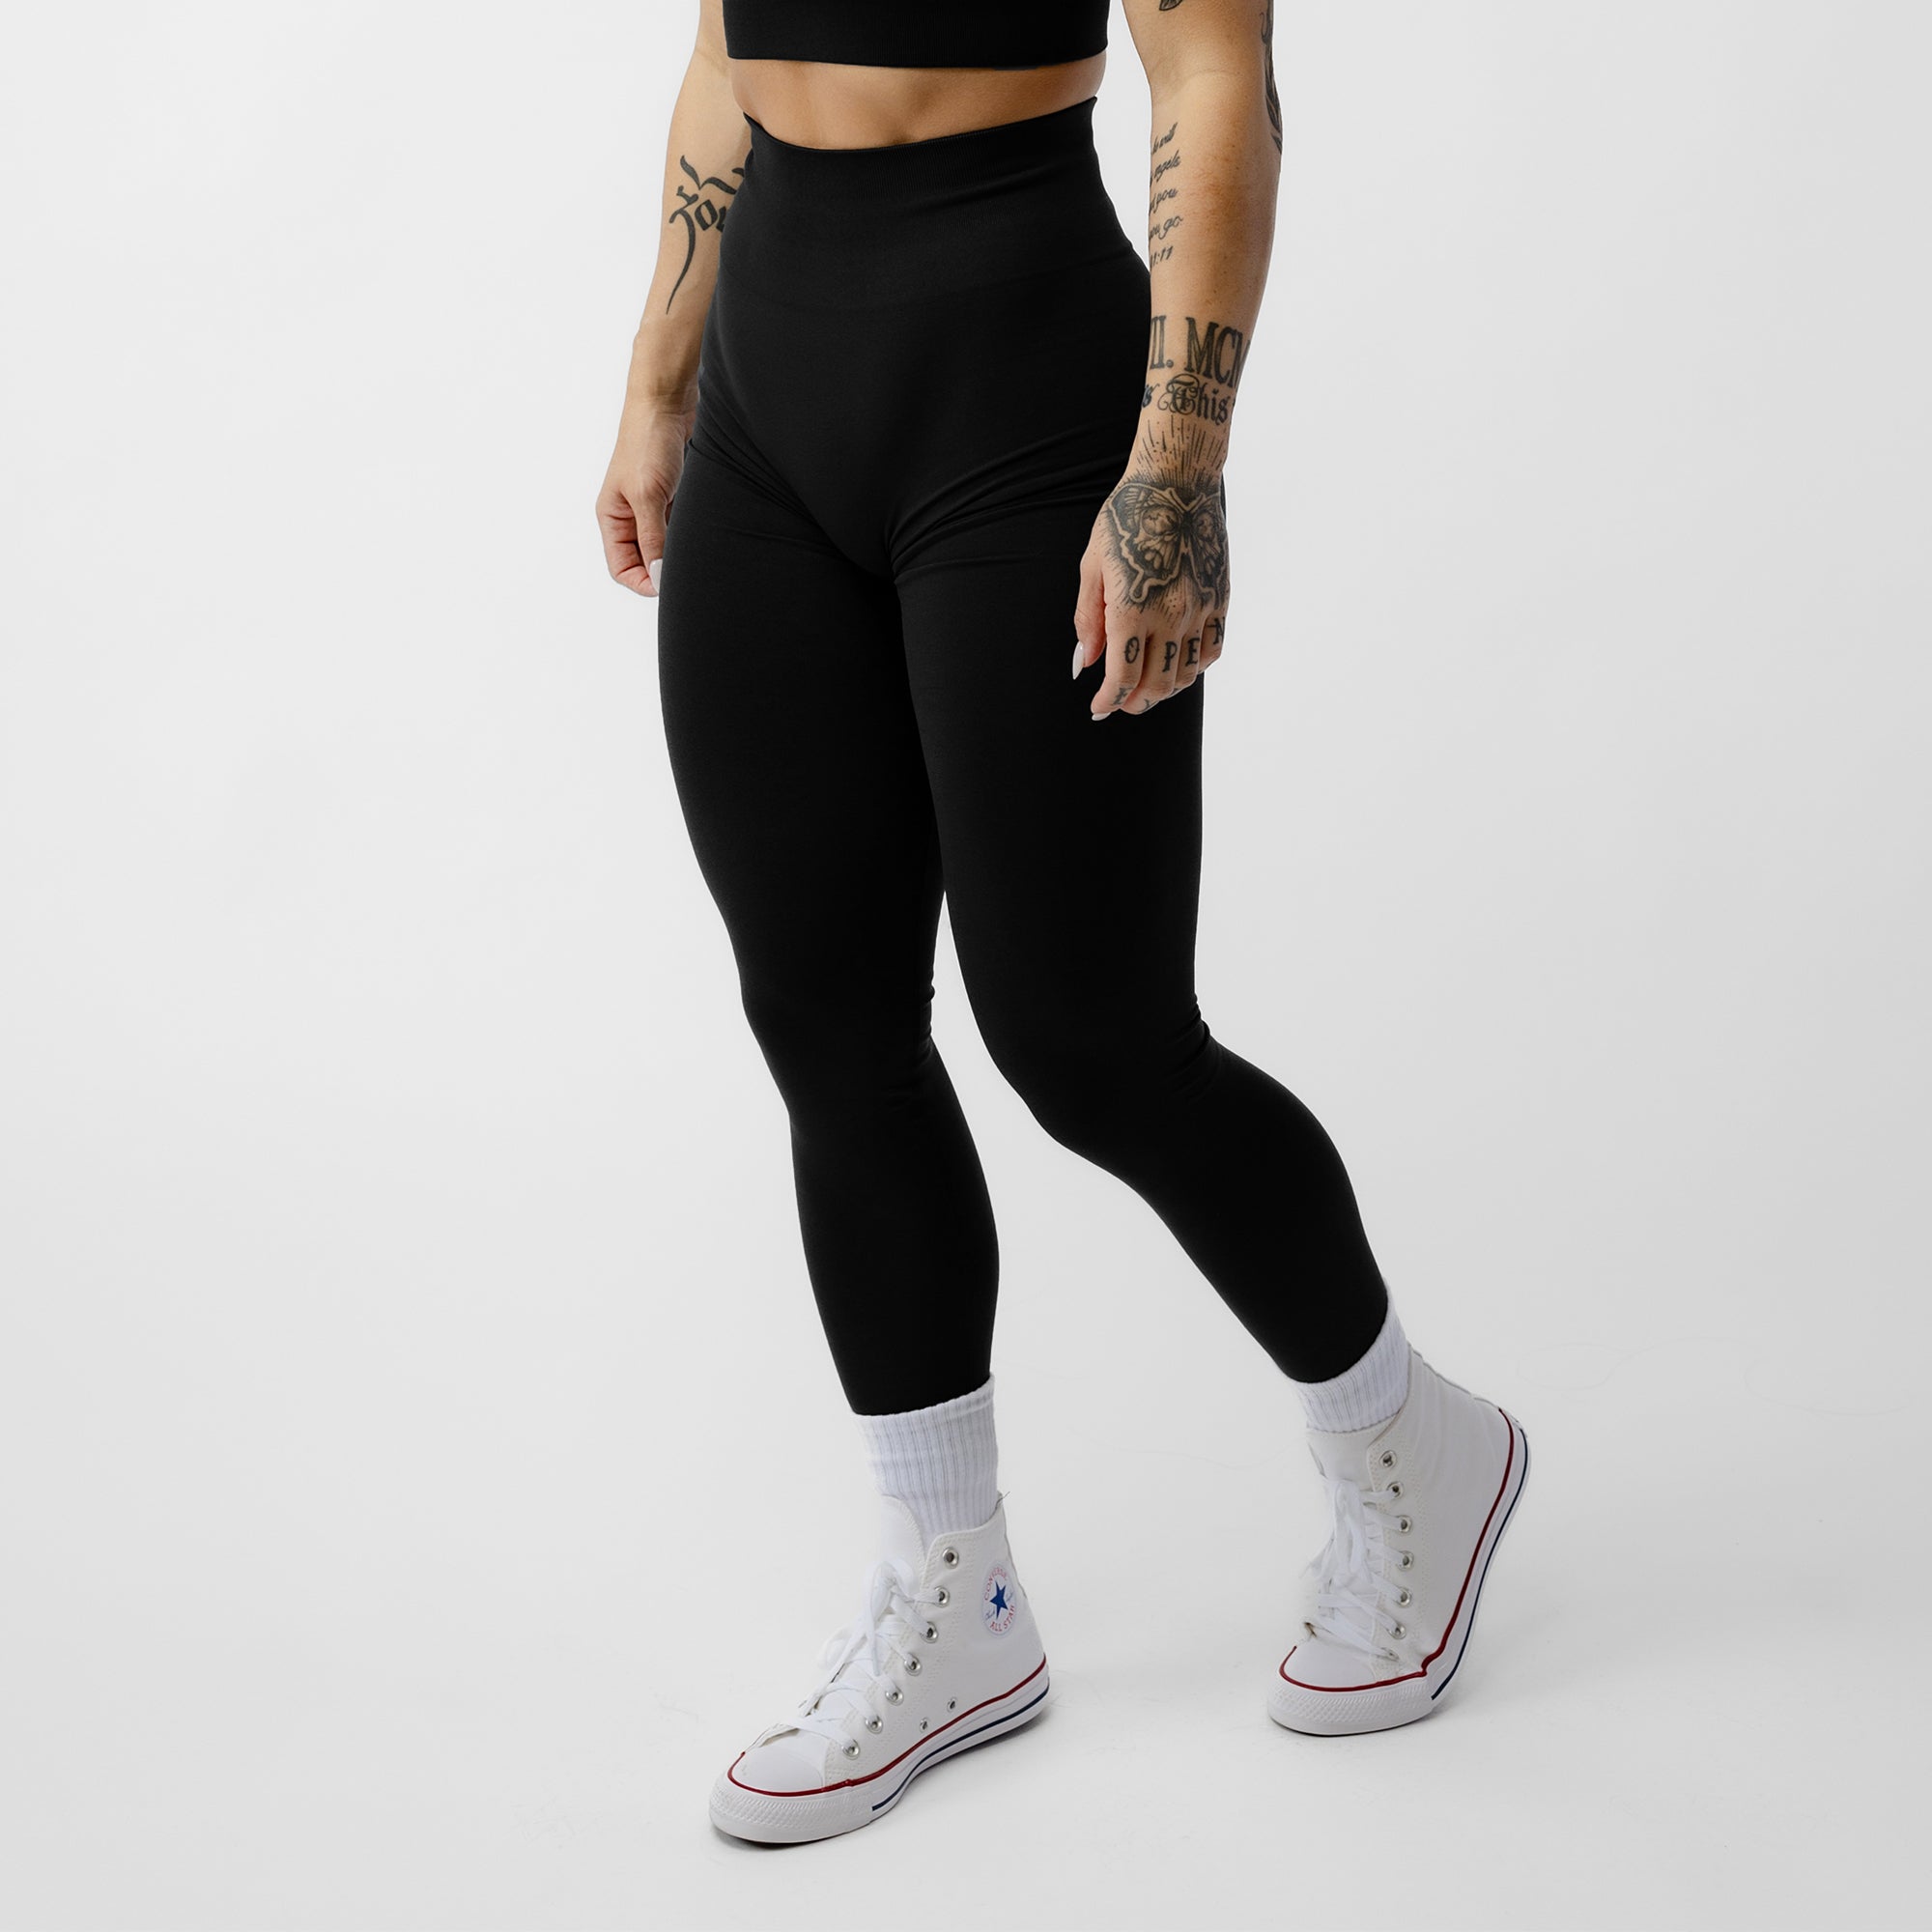 Nike Dri-Fit Women's One Training Capri Leggings Black Stretch Pull On S